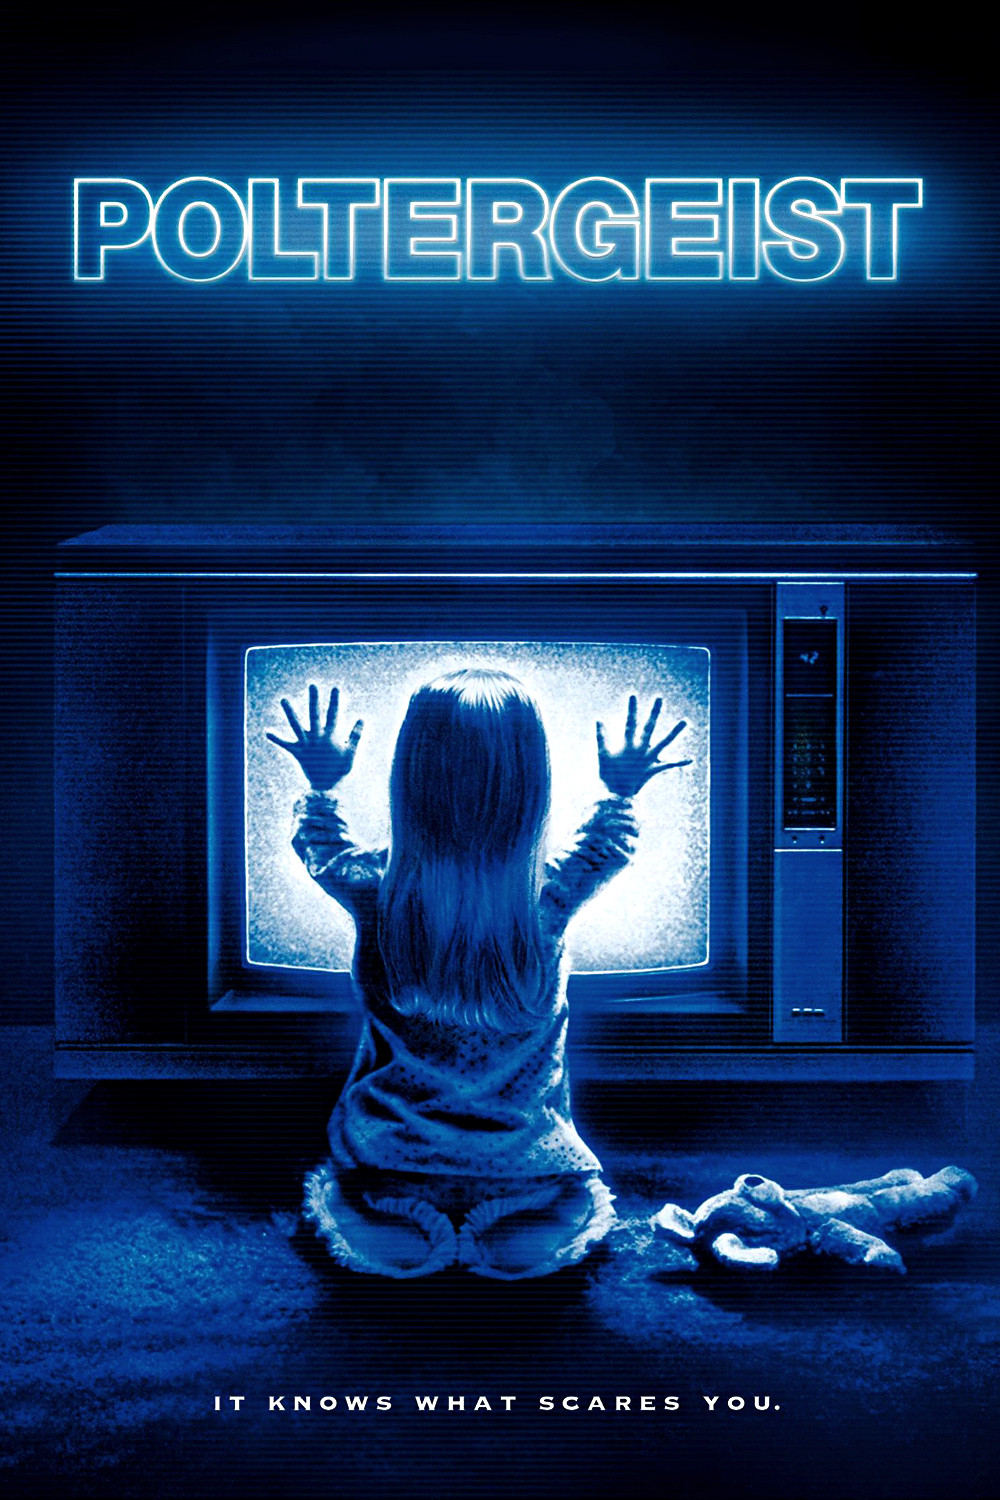 Poltergeist (1982) HD wallpapers, Desktop wallpaper - most viewed